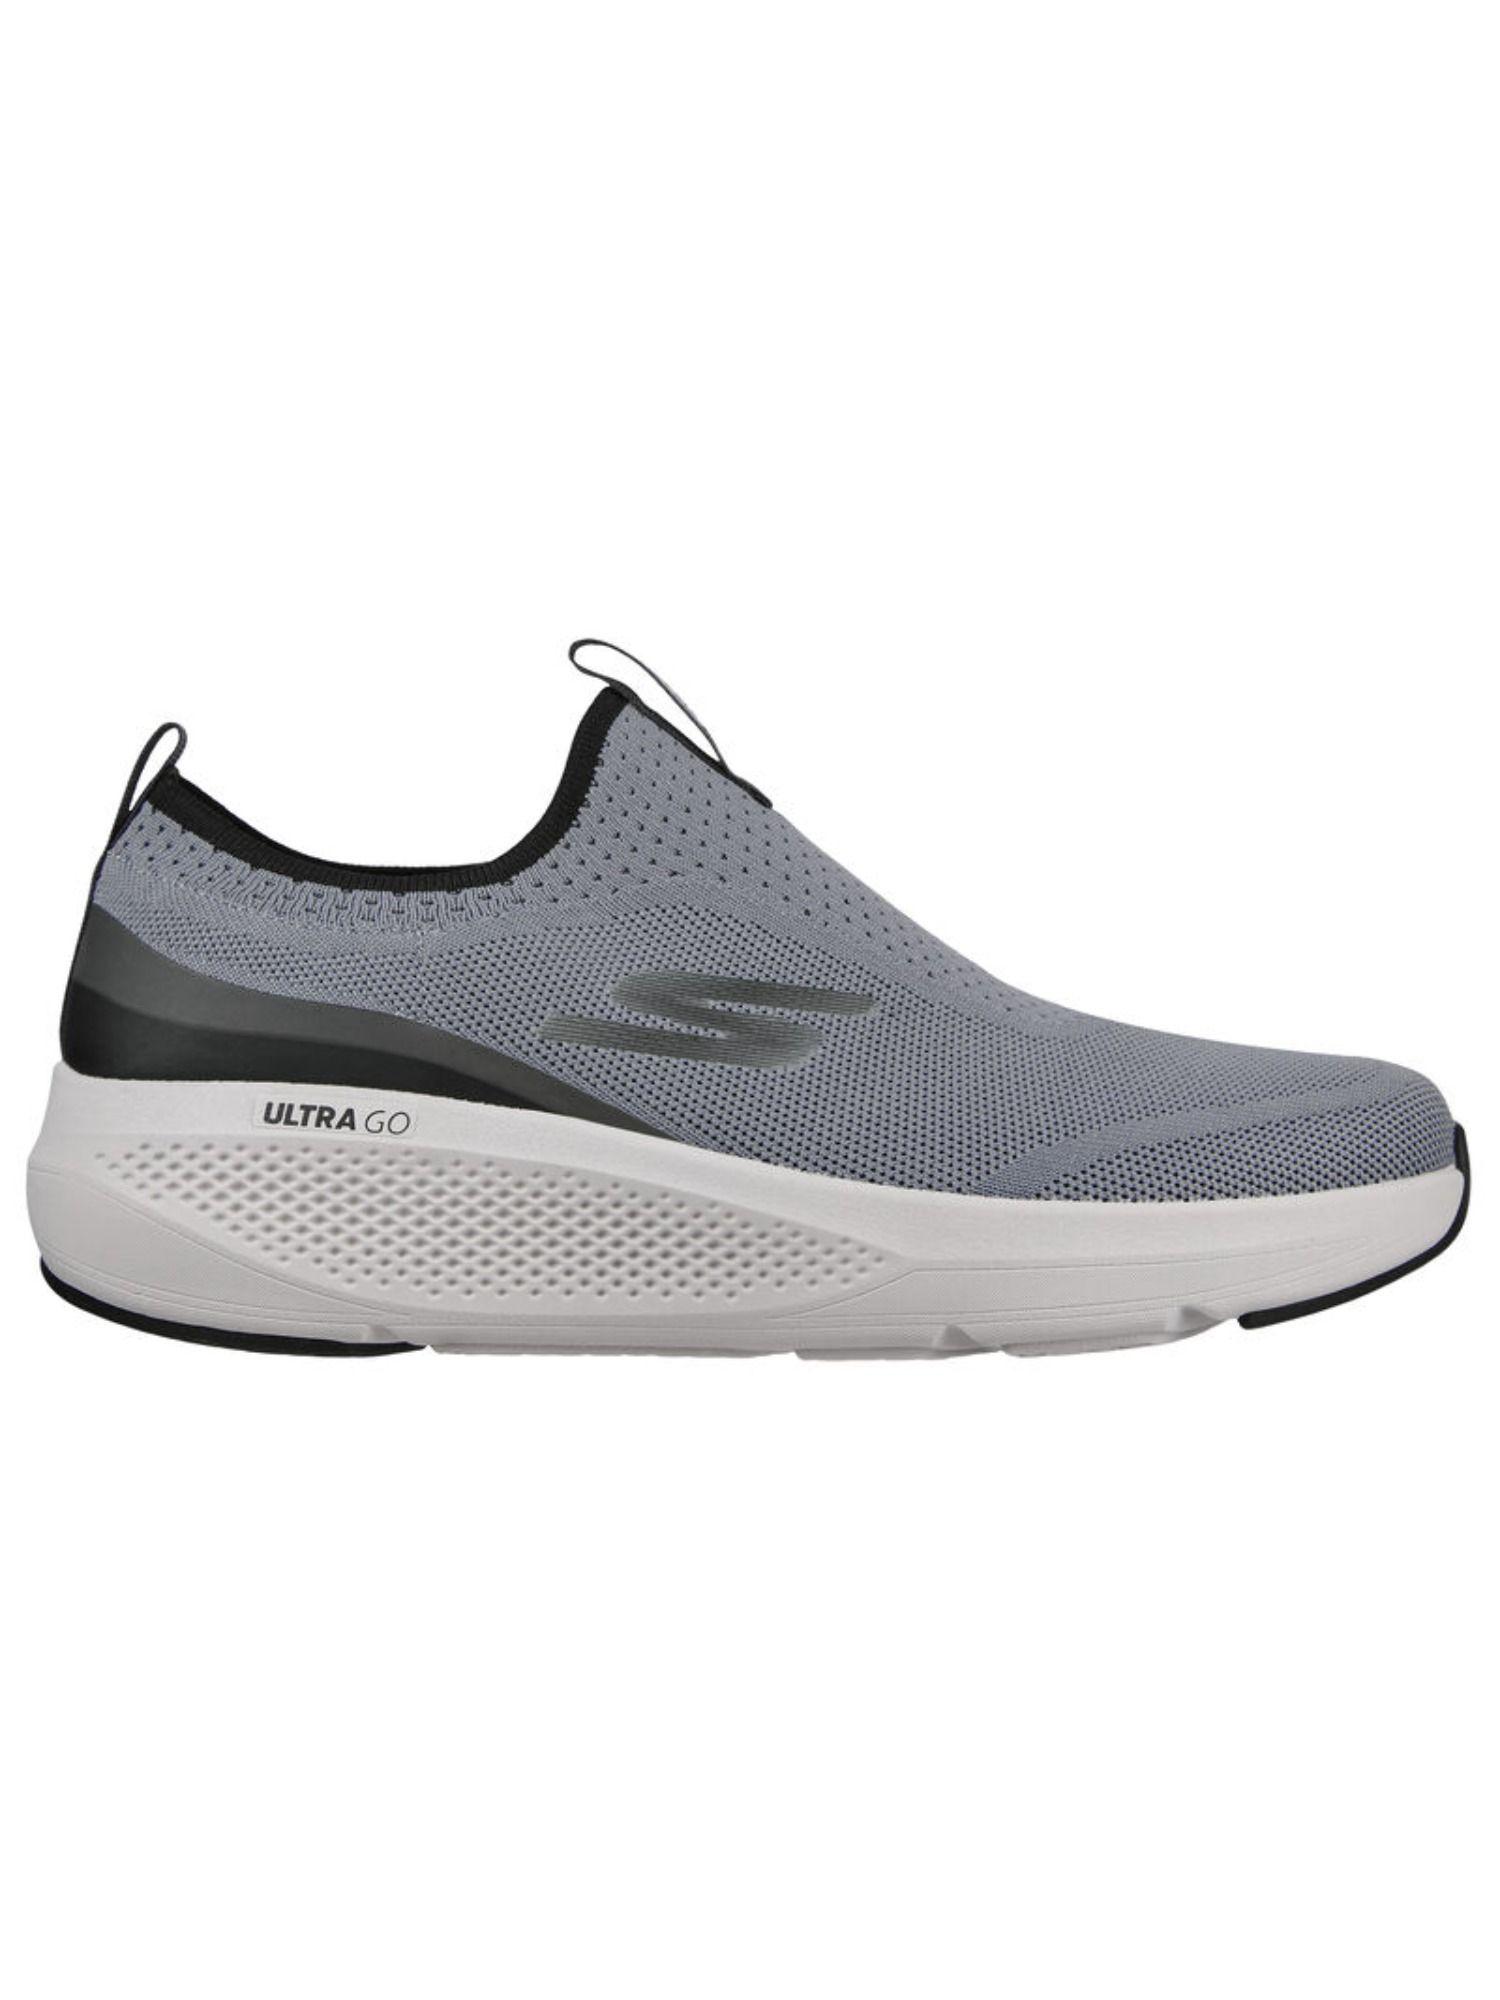 go run elevate - upraise grey sneakers